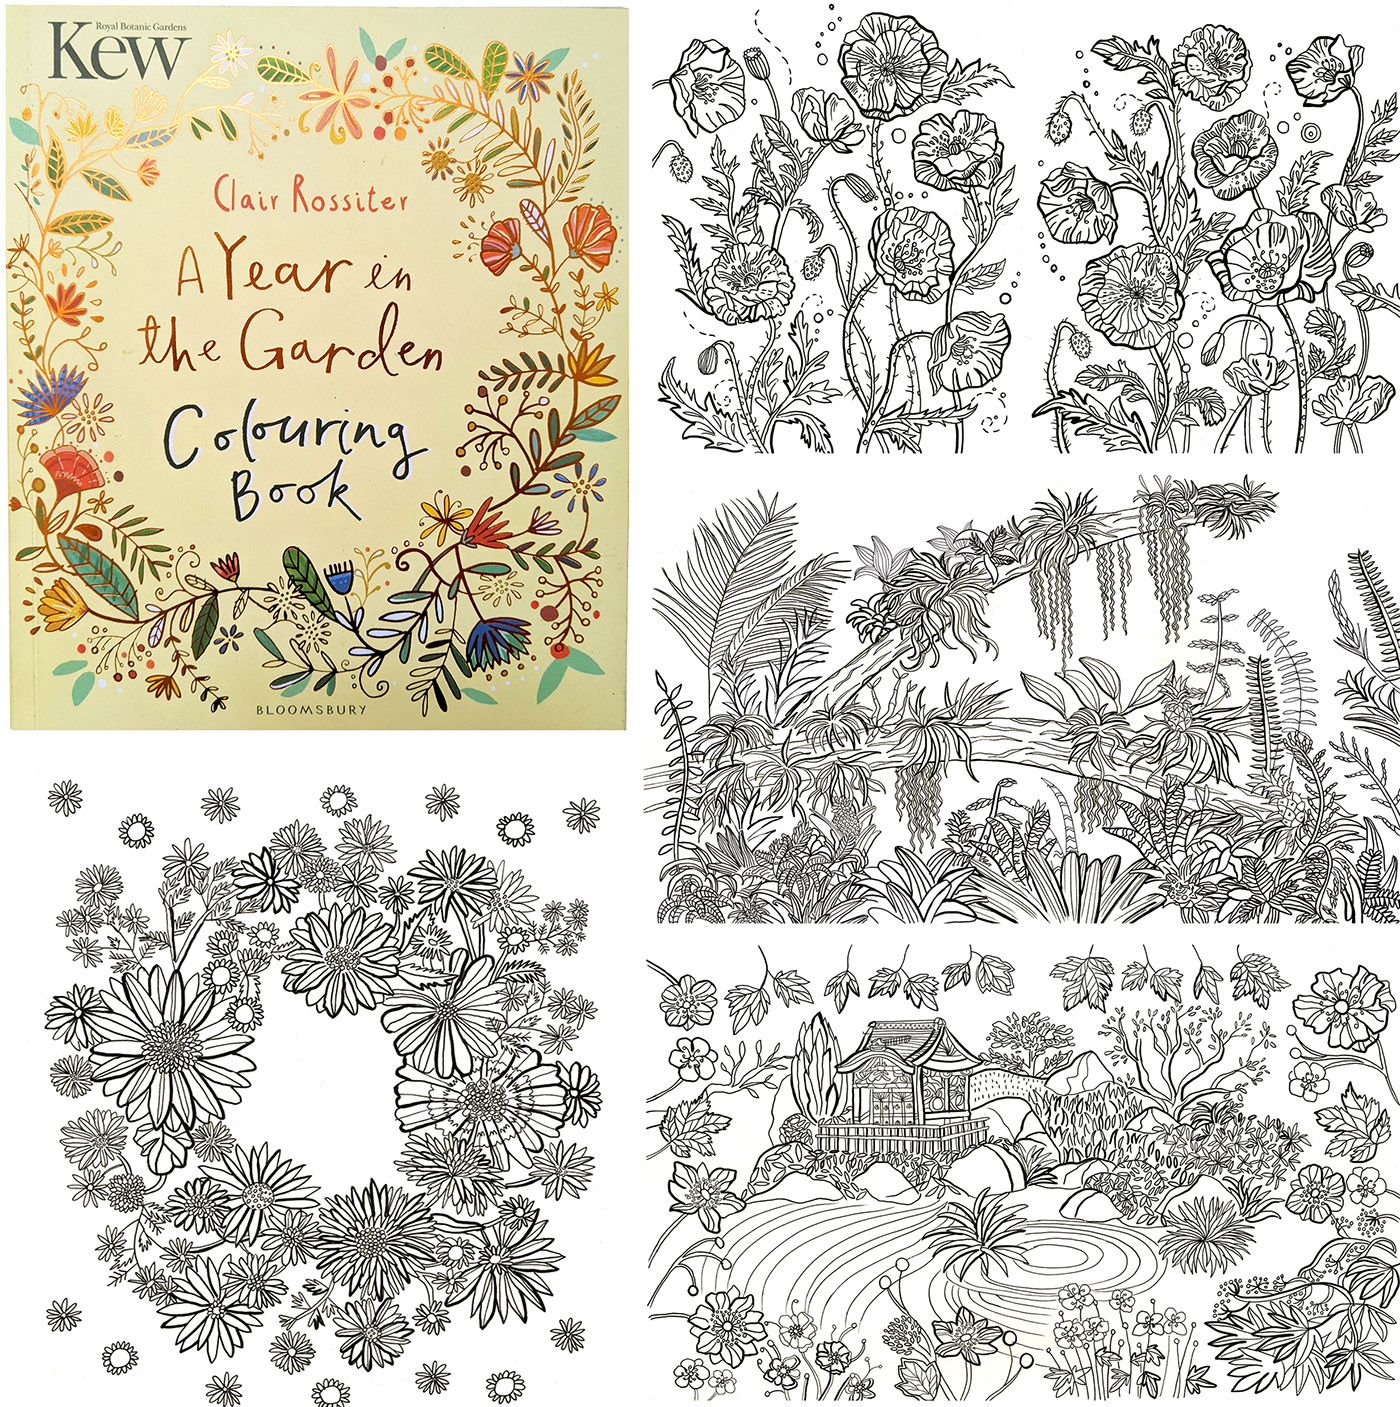 Kew Gardens books